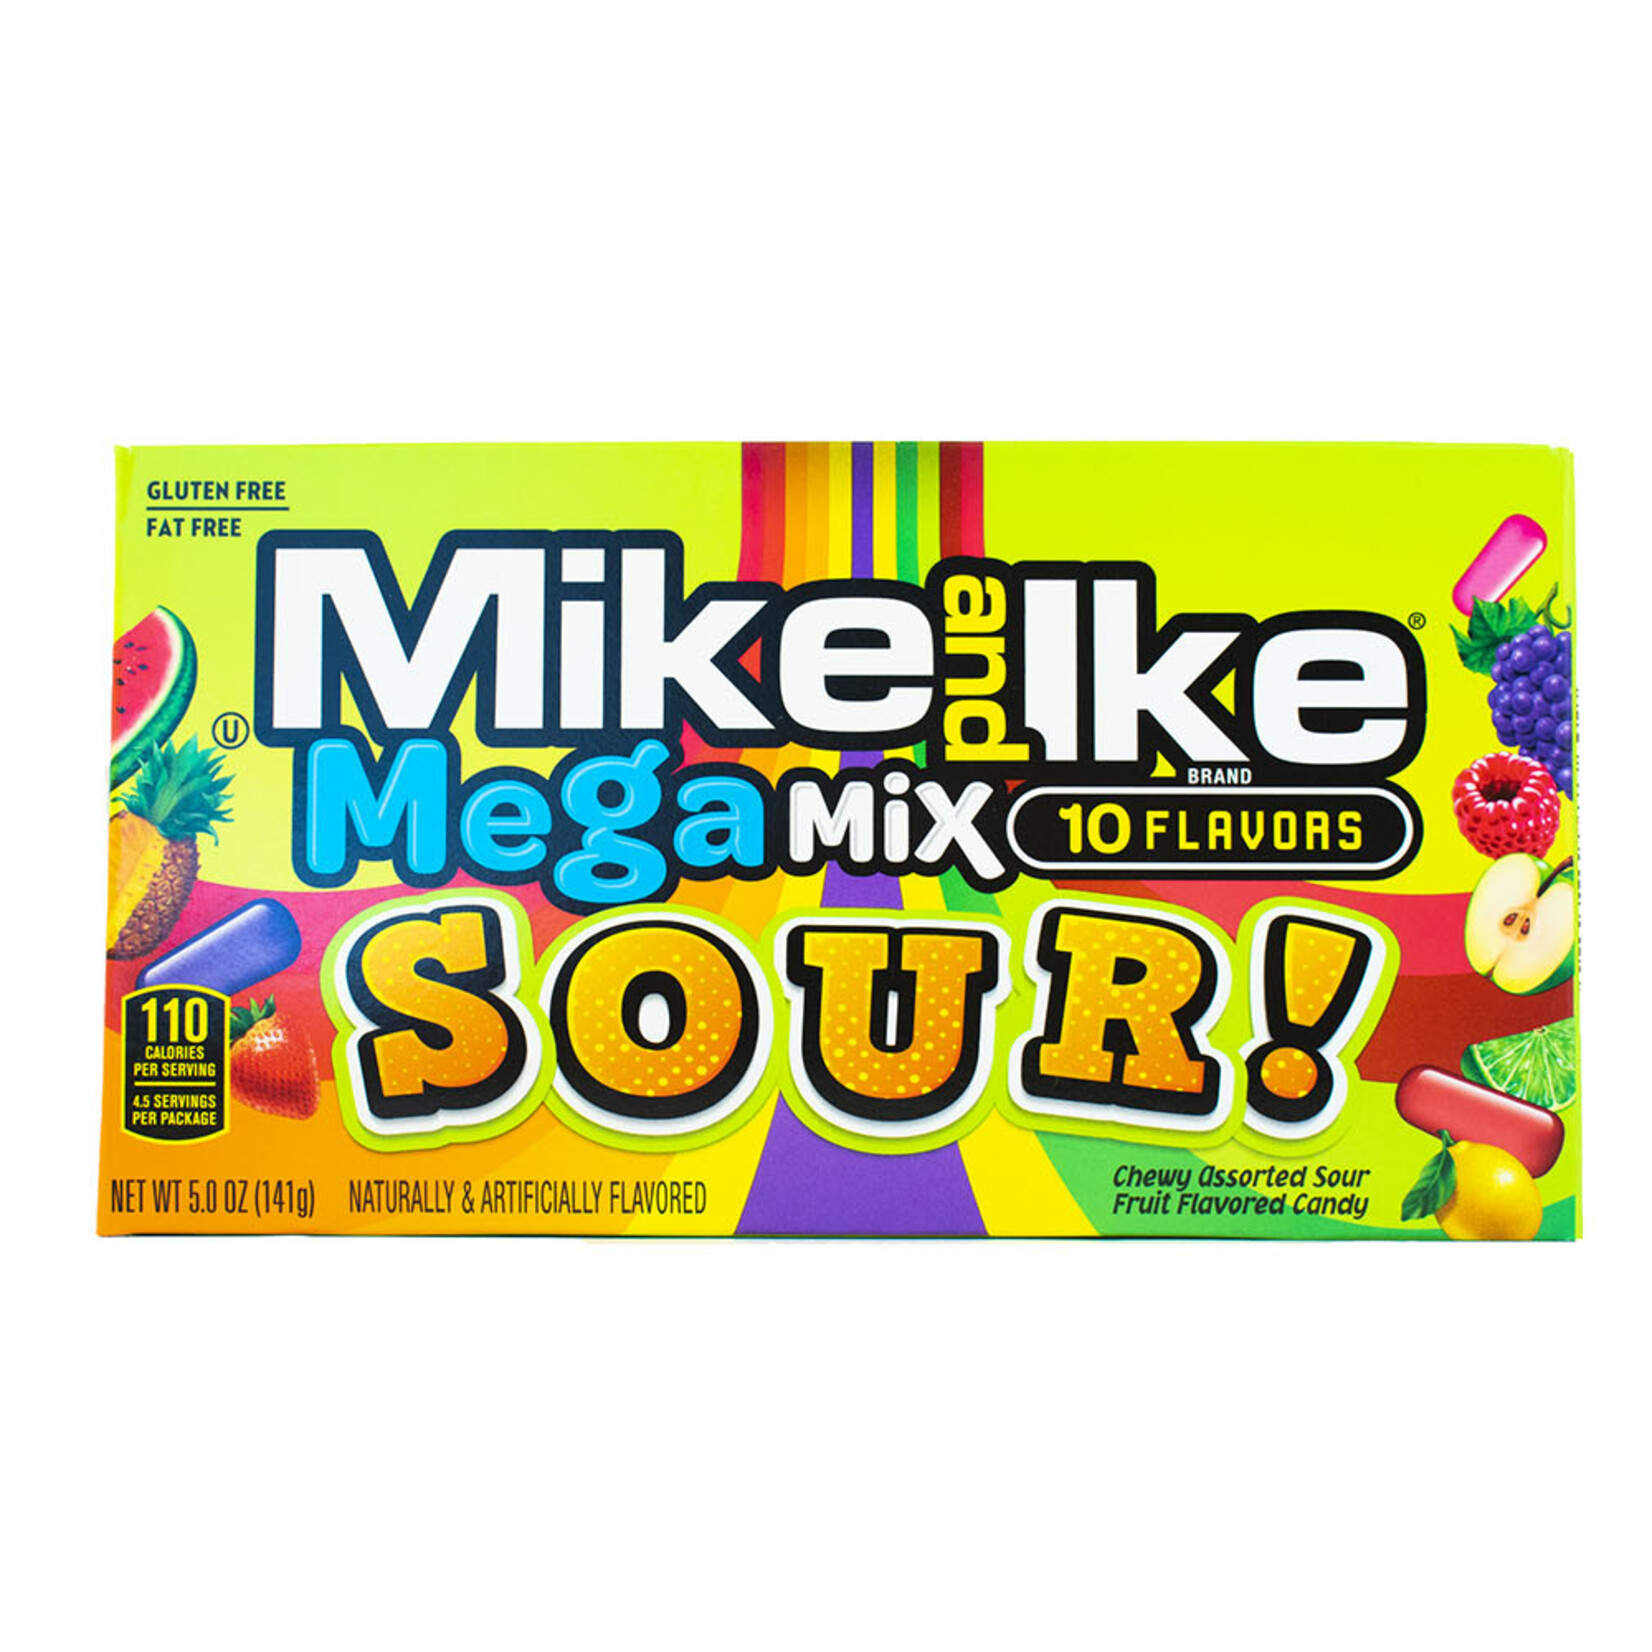 mike and ike Mike & Ike Megamix Sour!